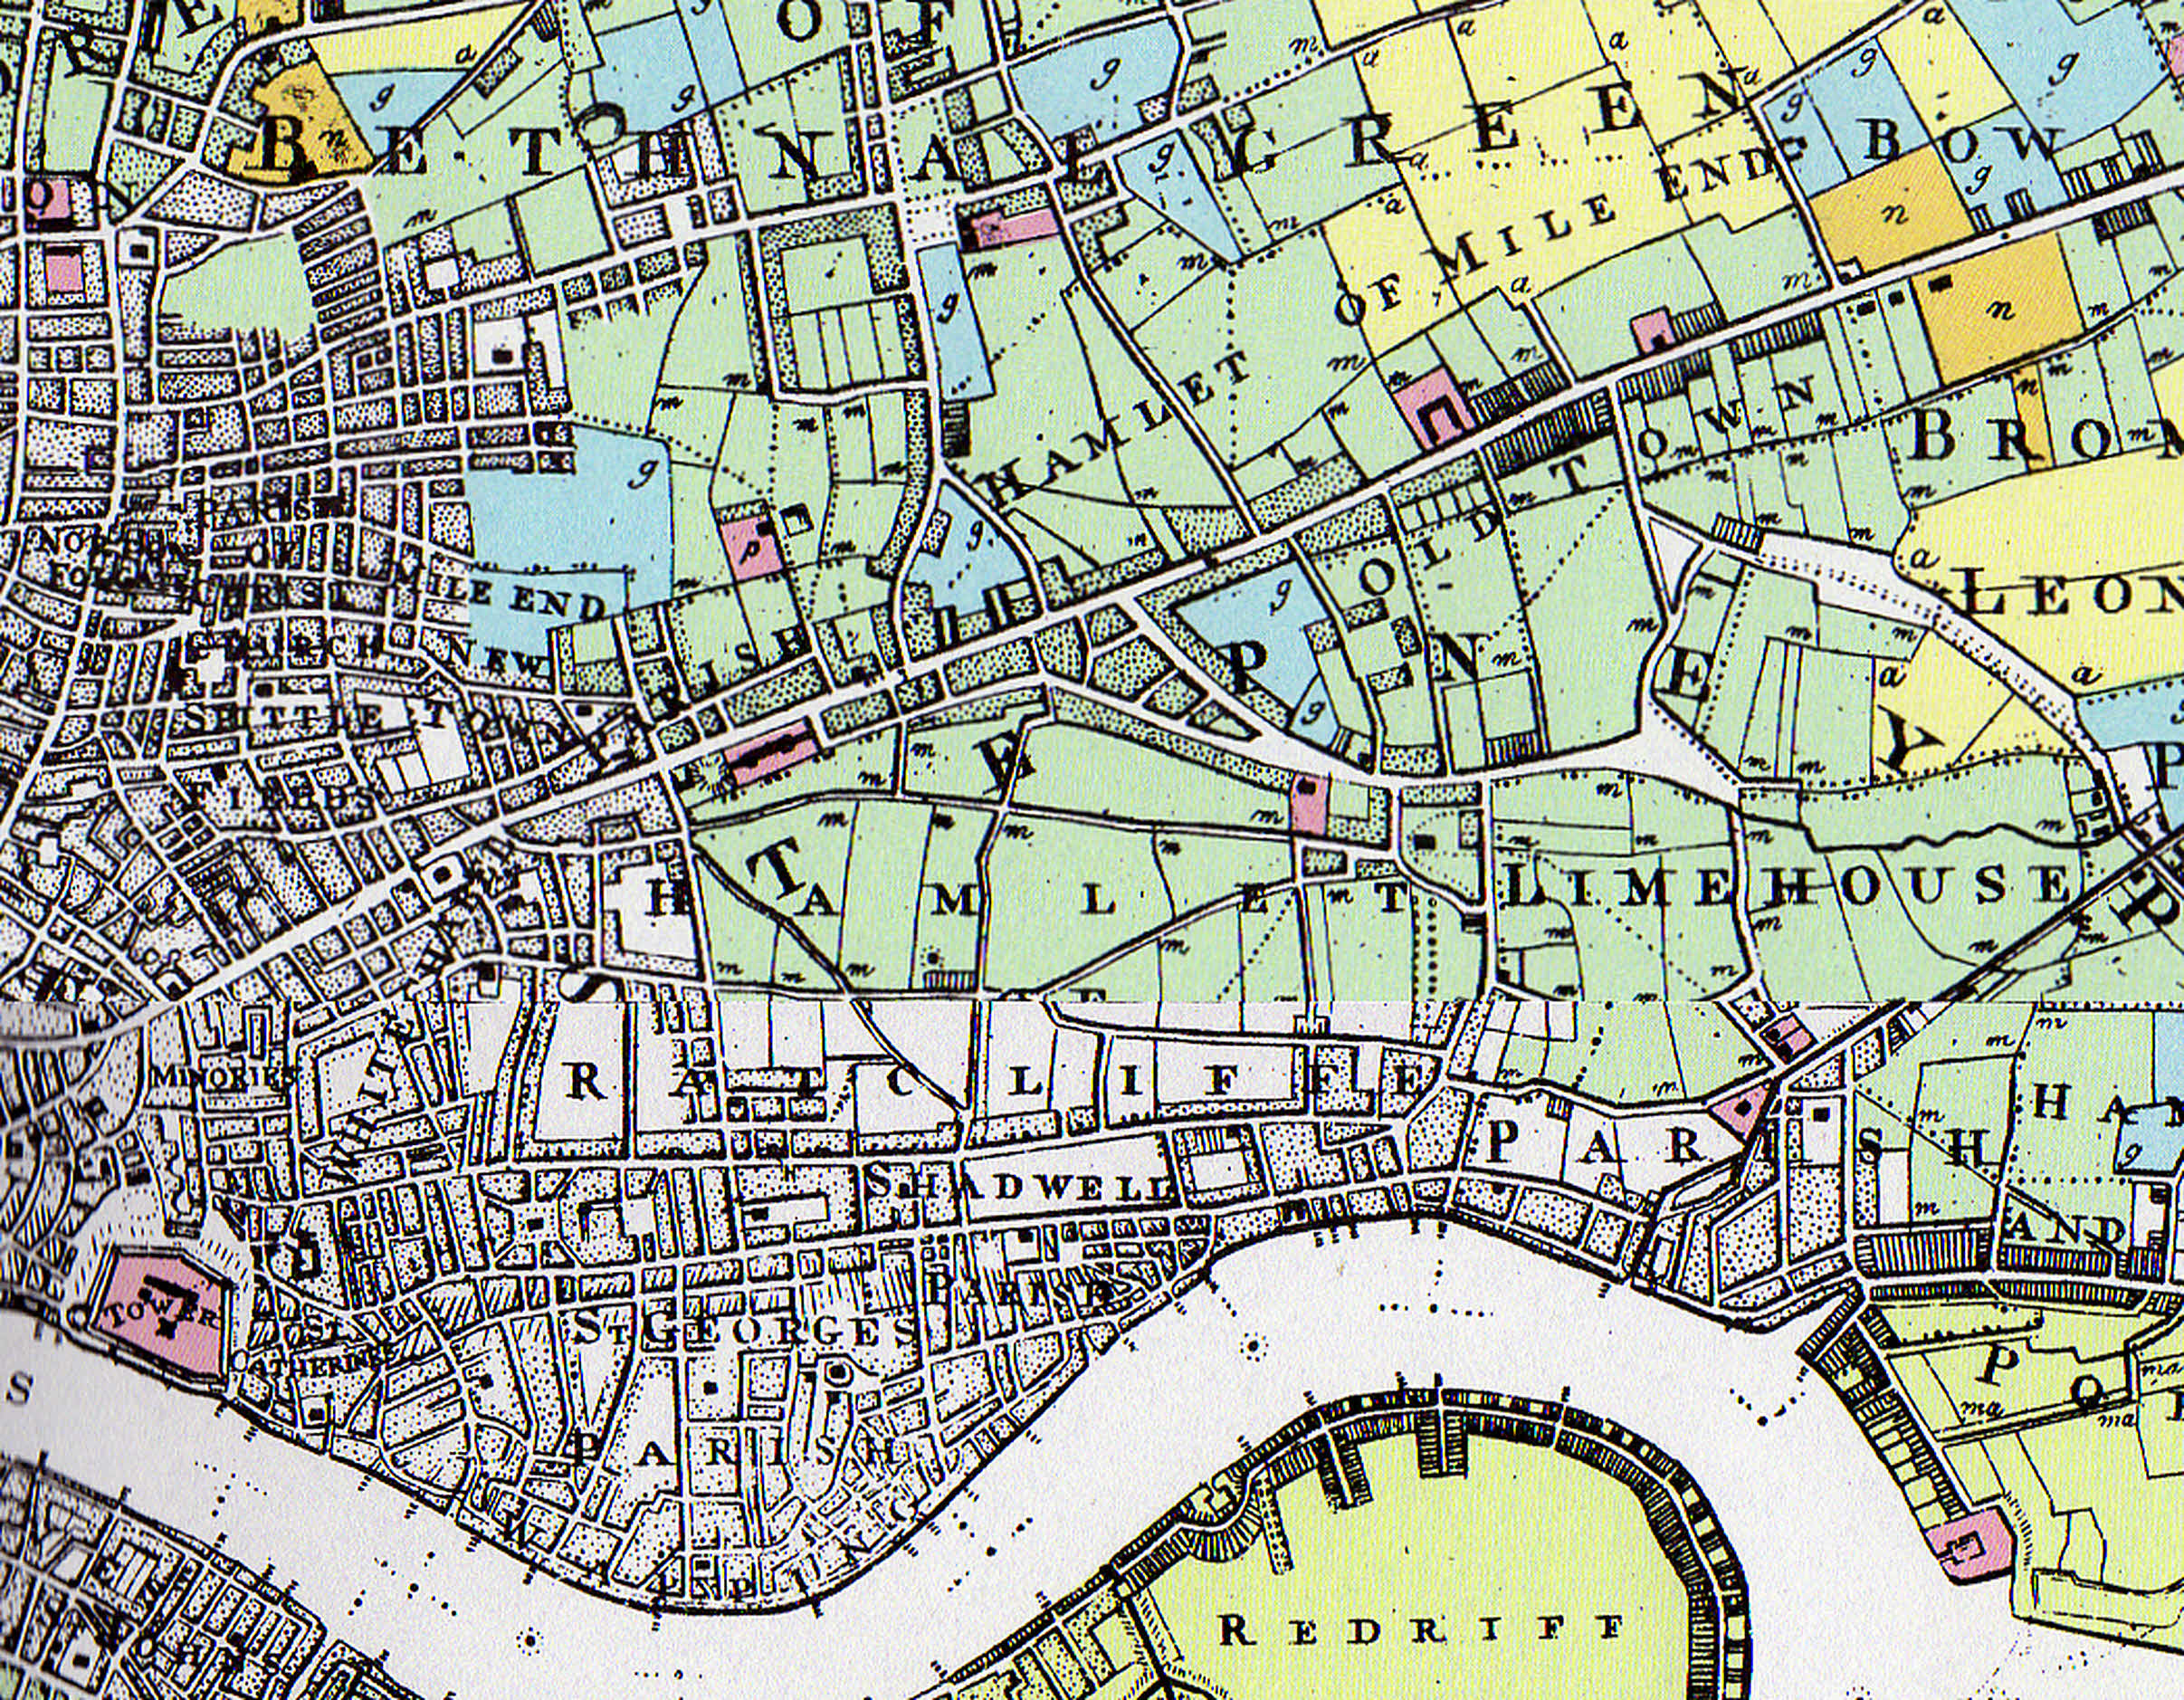 1800 - "Land Use Map of London & Environs"